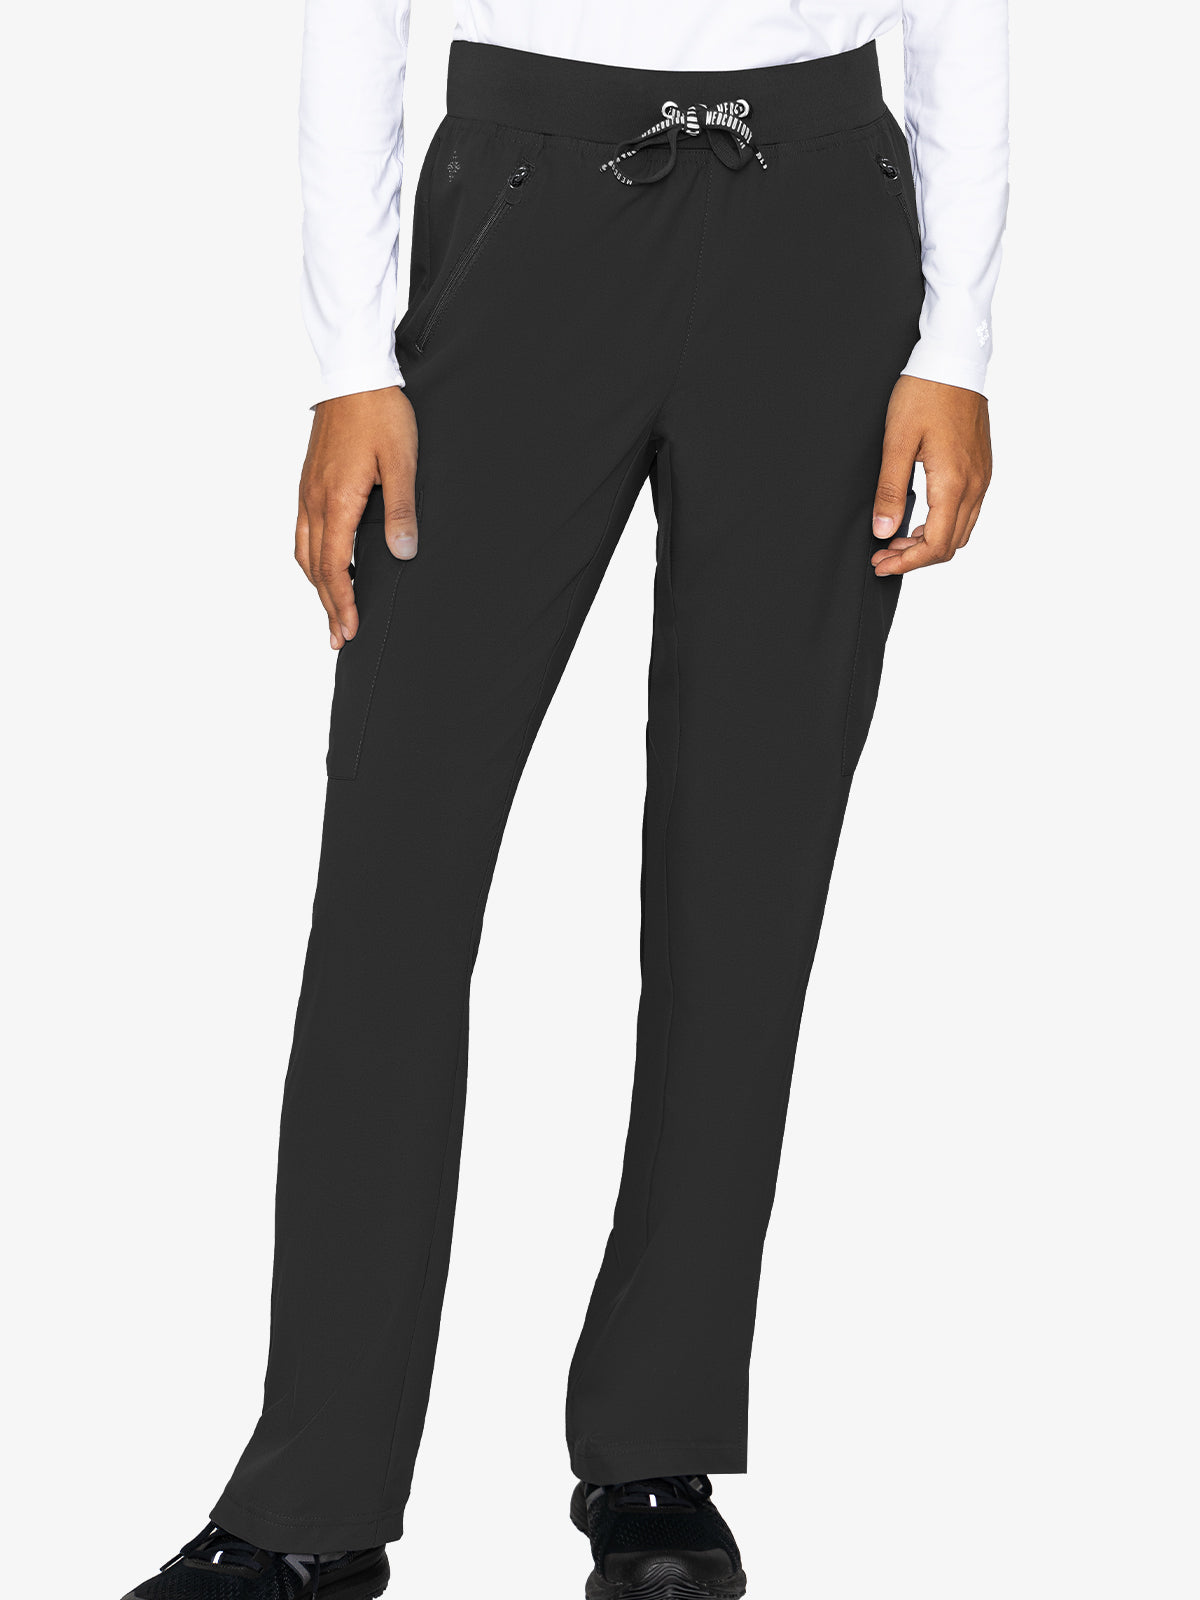 Med Couture 2702 Insight Women's Zipper Pocket Pant - PETITE Black Front 